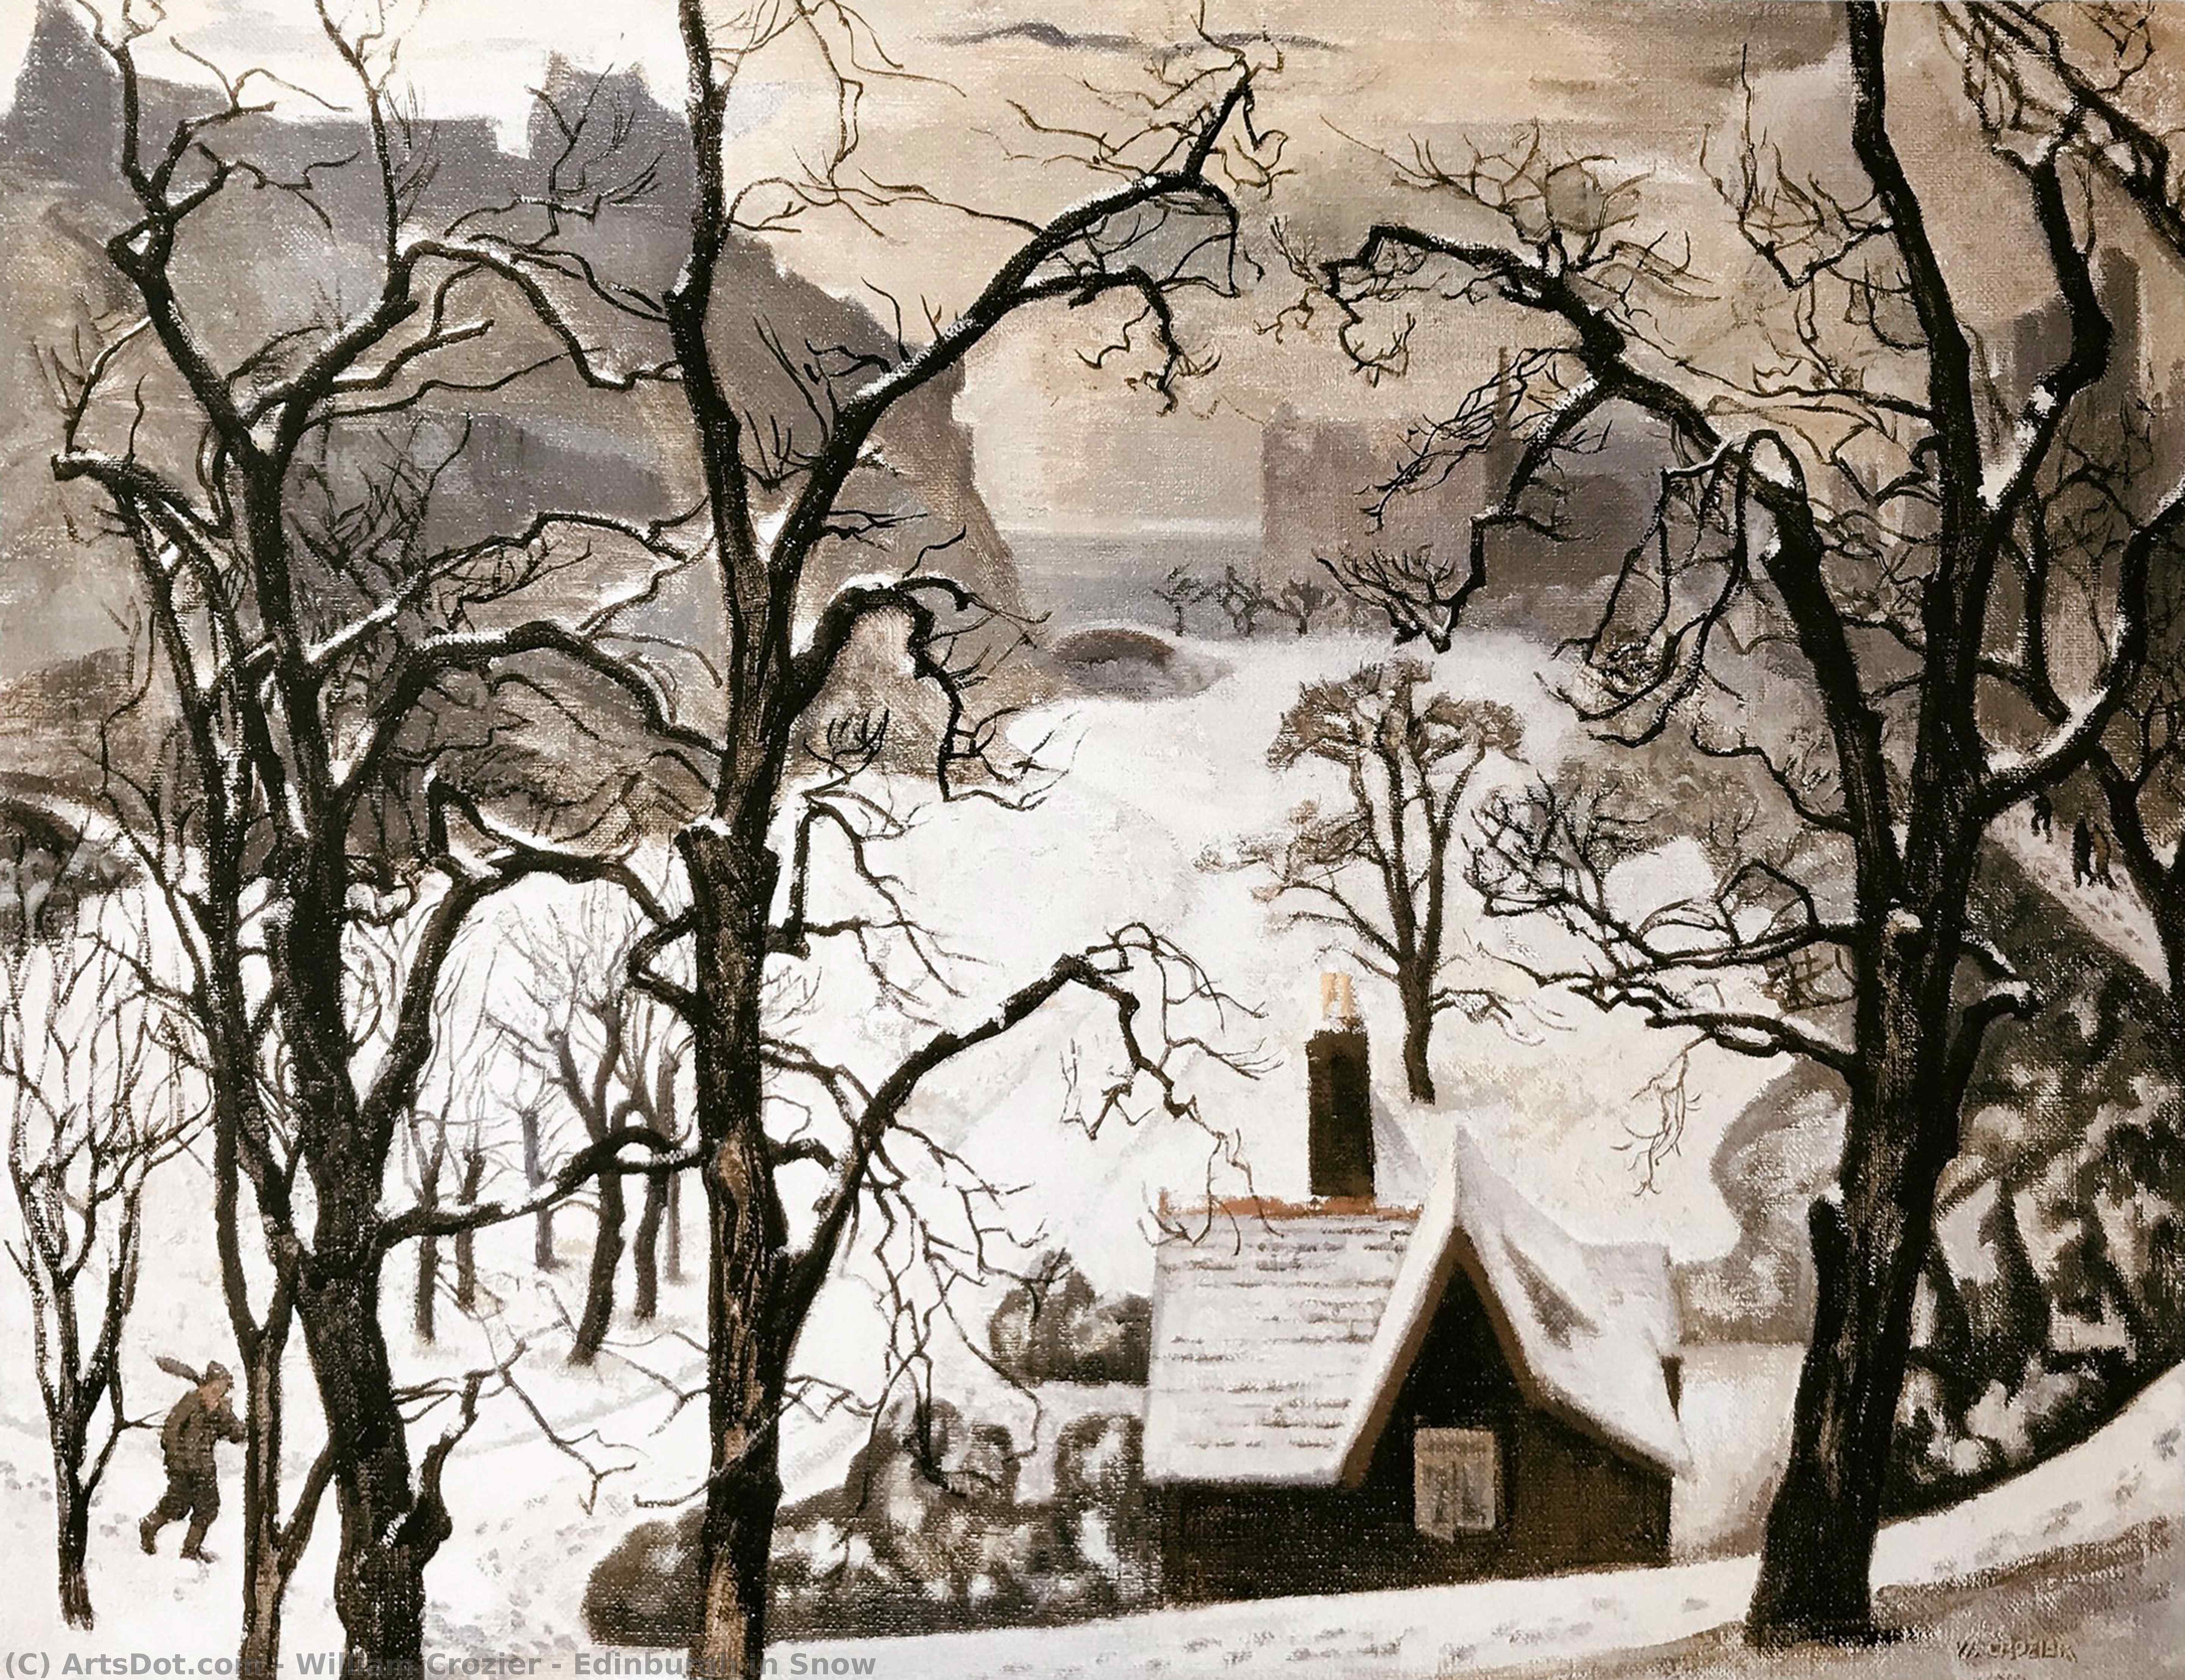 Edinburgh in Snow, 1928 by William Crozier (1930-2011) William Crozier | ArtsDot.com